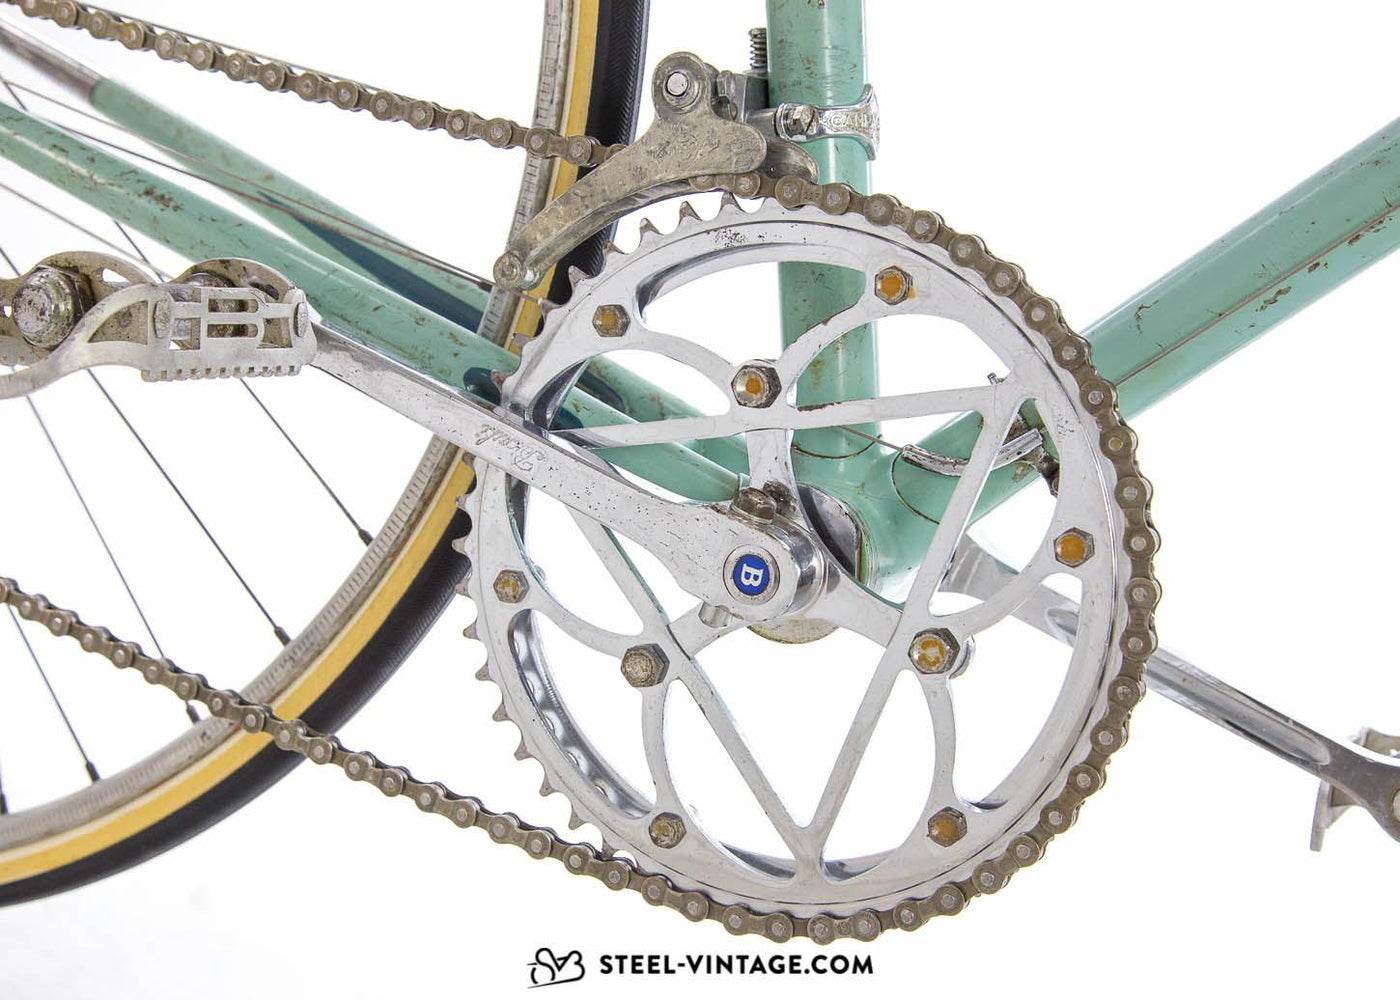 Bianchi Campione del Mondo Racing Bike 1950s - Steel Vintage Bikes